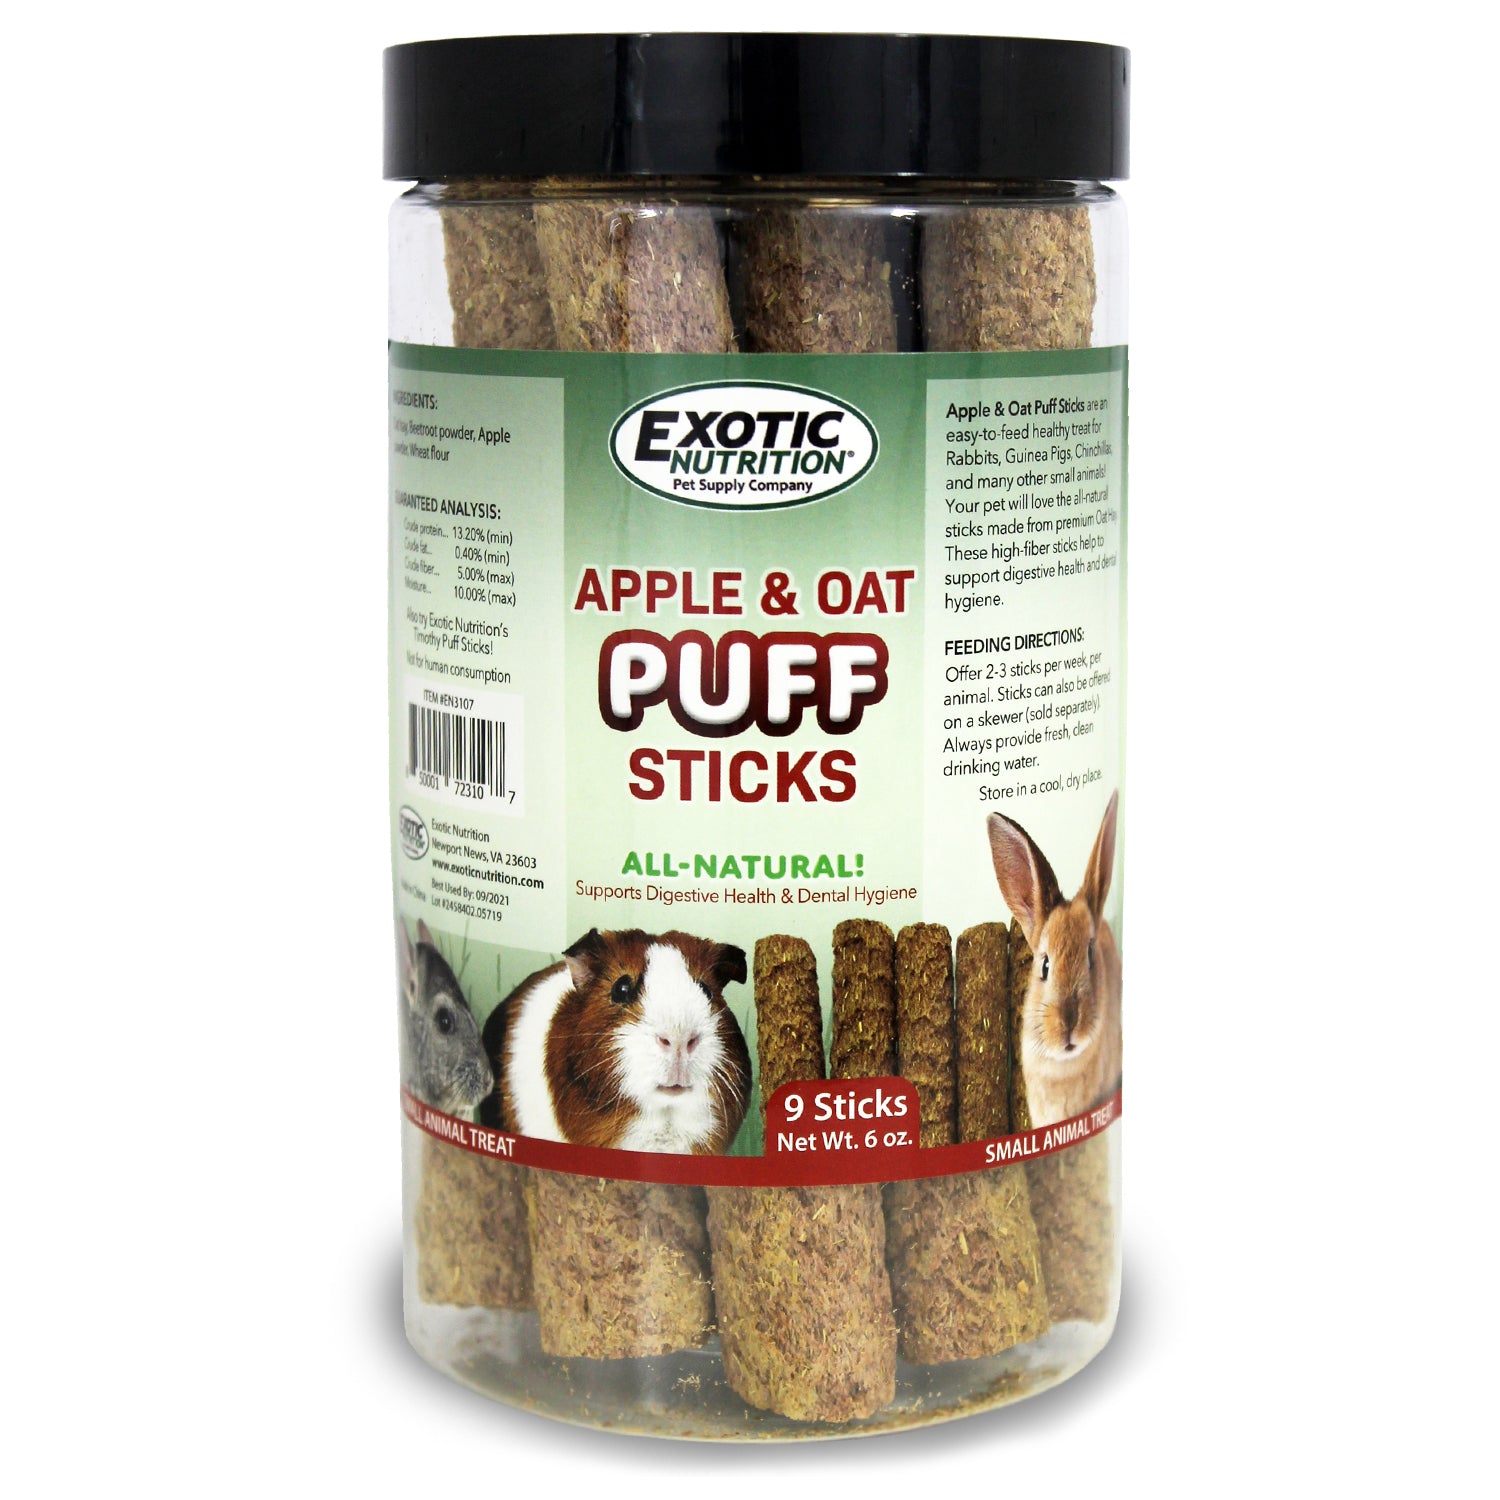 Exotic Nutrition Apple & Oat Puff Sticks